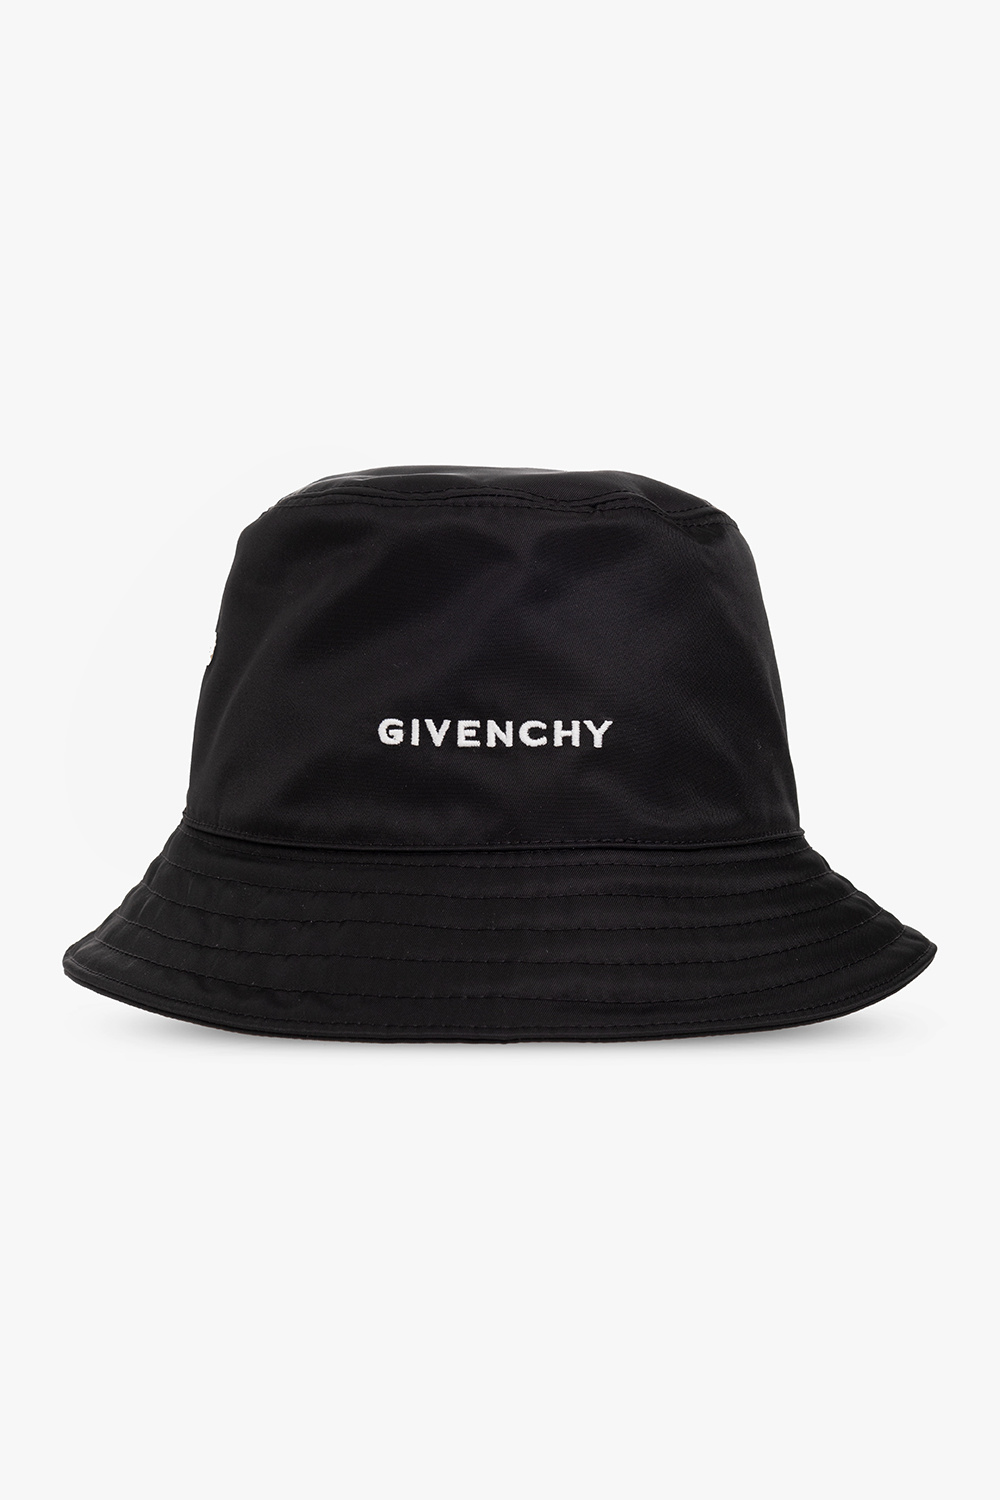 Givenchy Black hats adidas Originals